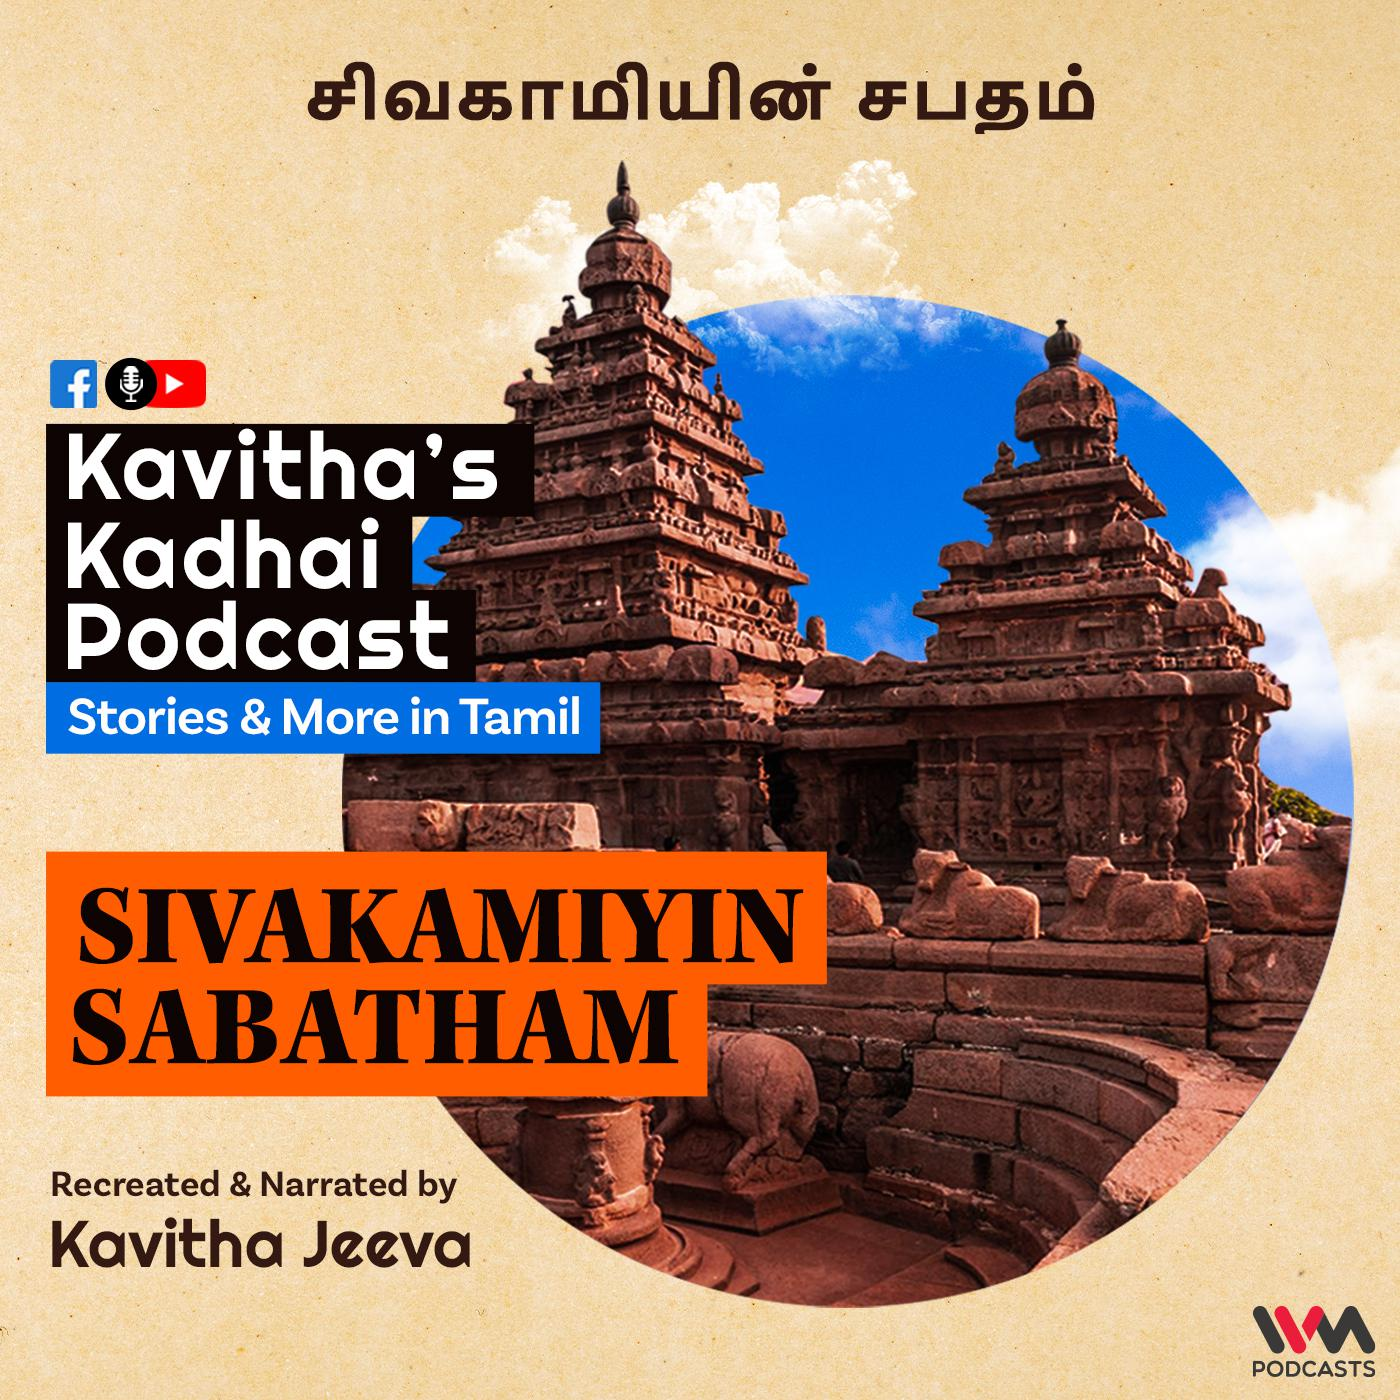 KadhaiPodcast’s Sivakamiyin Sabatham with Kavitha Jeeva - Episode #144